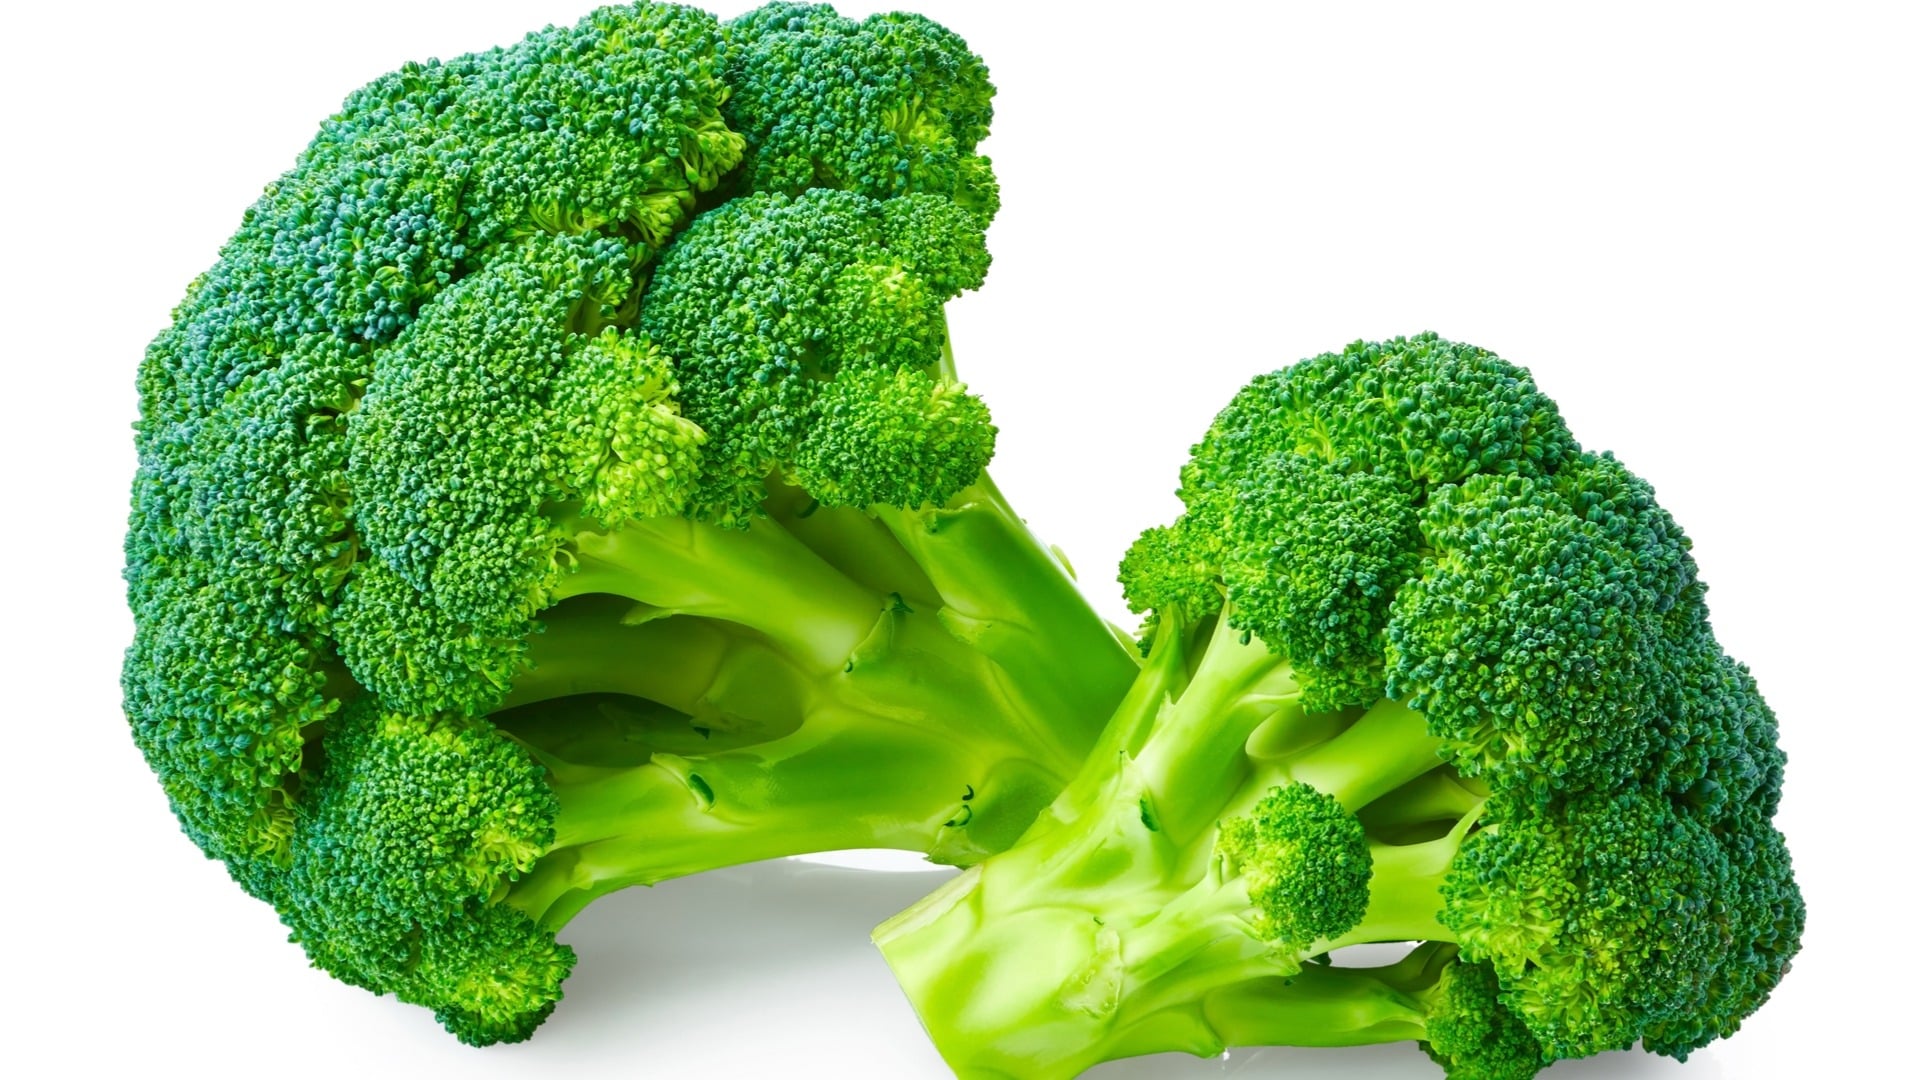 Broccoli Paratha